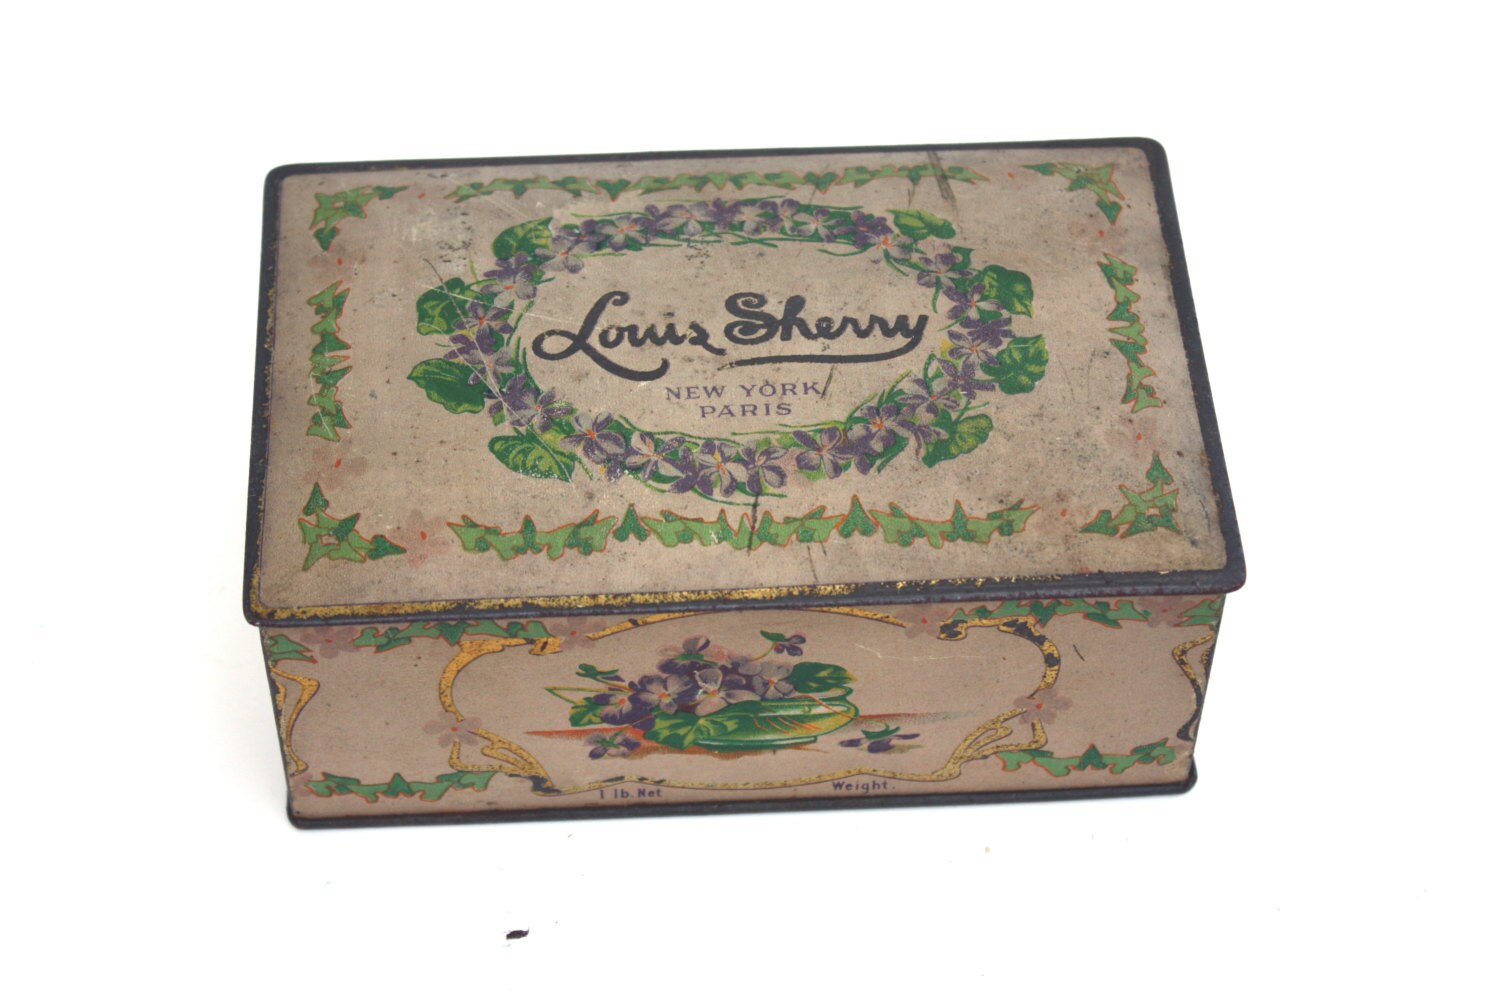 Vintage 1930s Louis Sherry Tin Candy Box